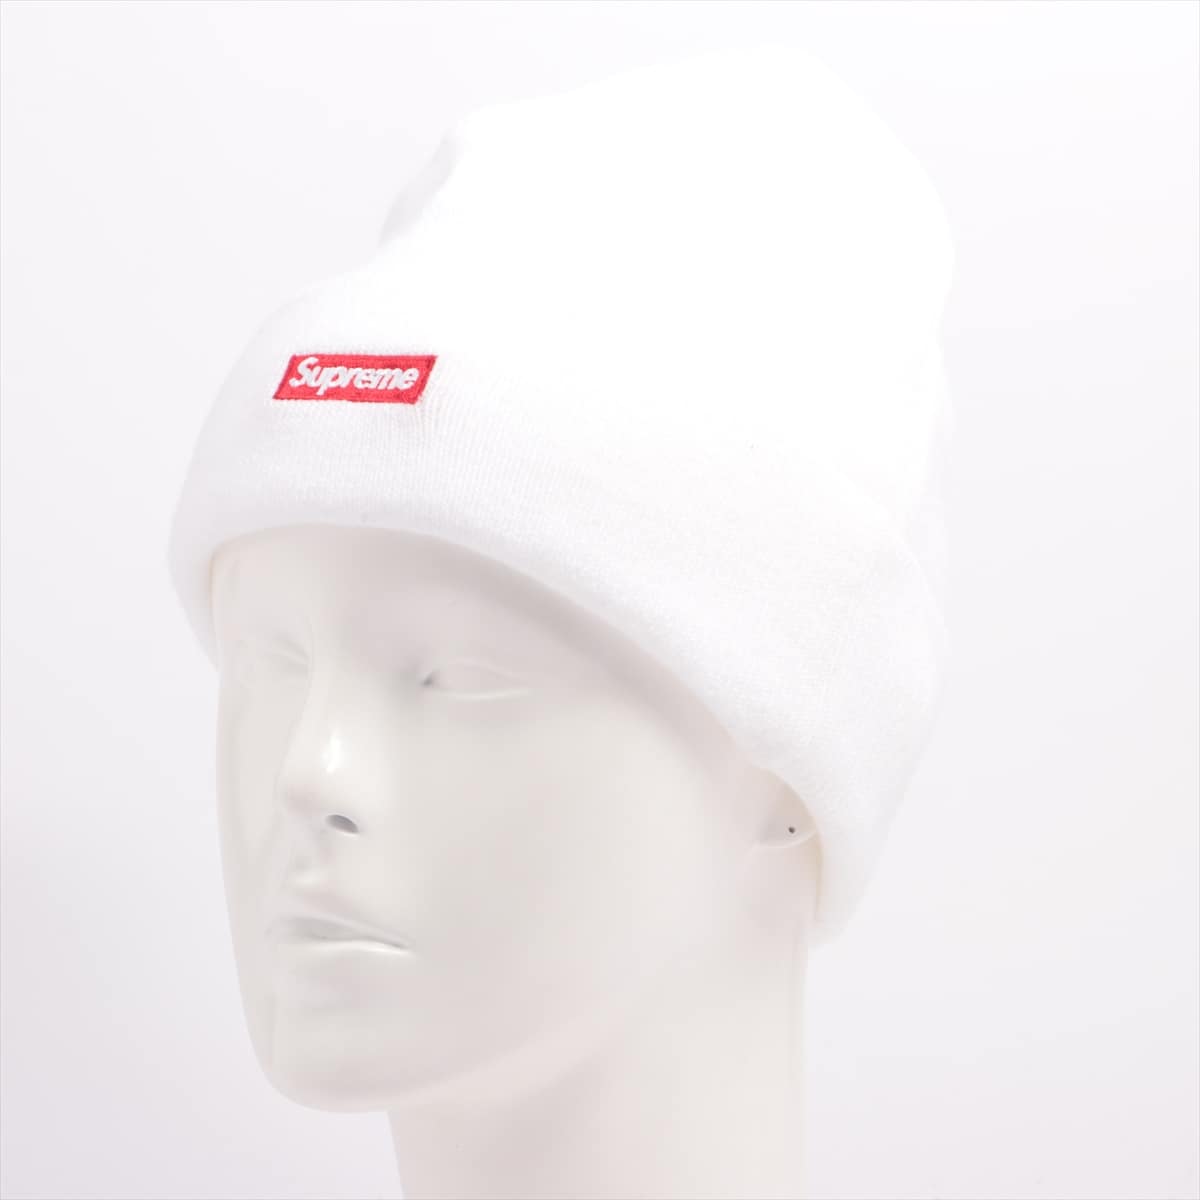 Supreme x Swarovski Knit cap Acrylic White New Era